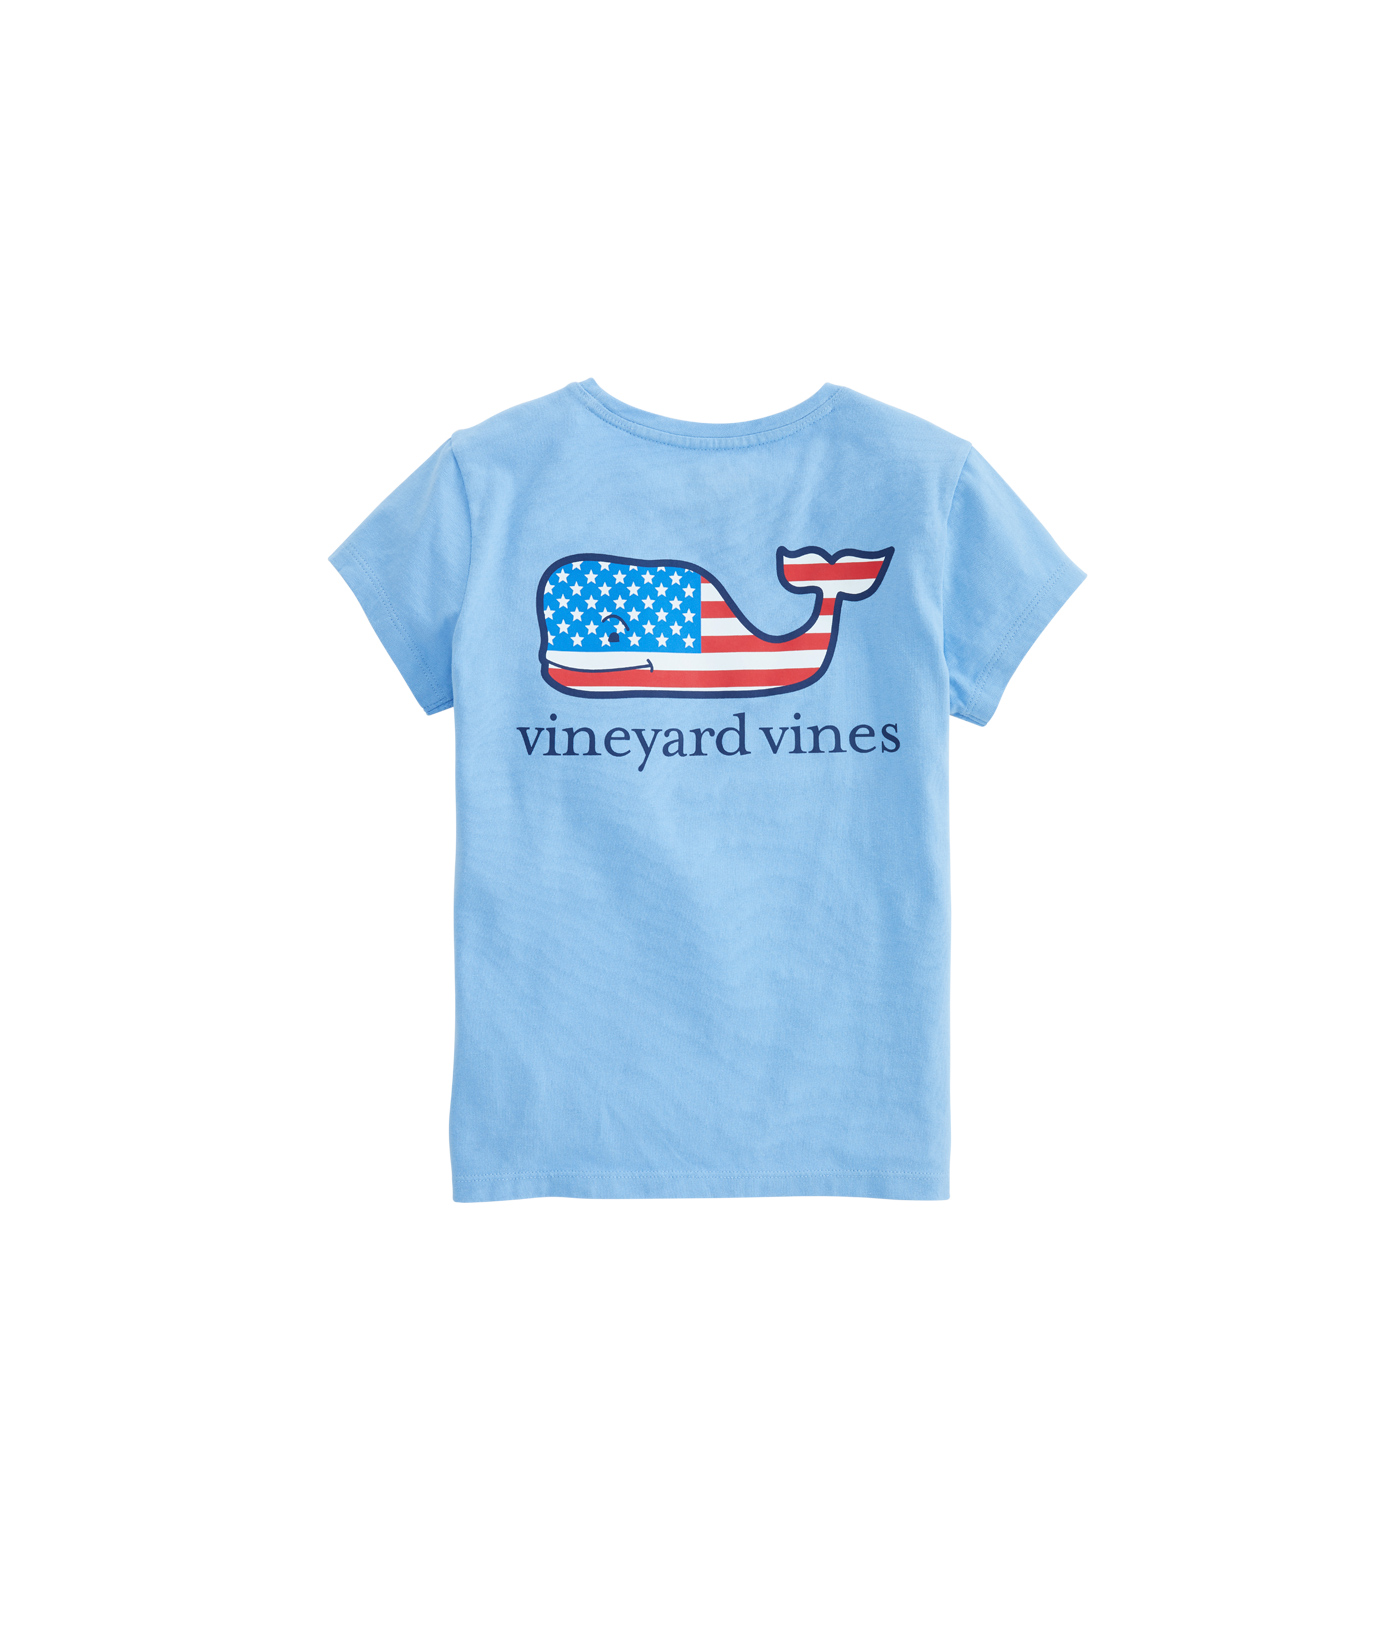 Vineyard vine girls shirts flag whale shirt pocket white new with tags 